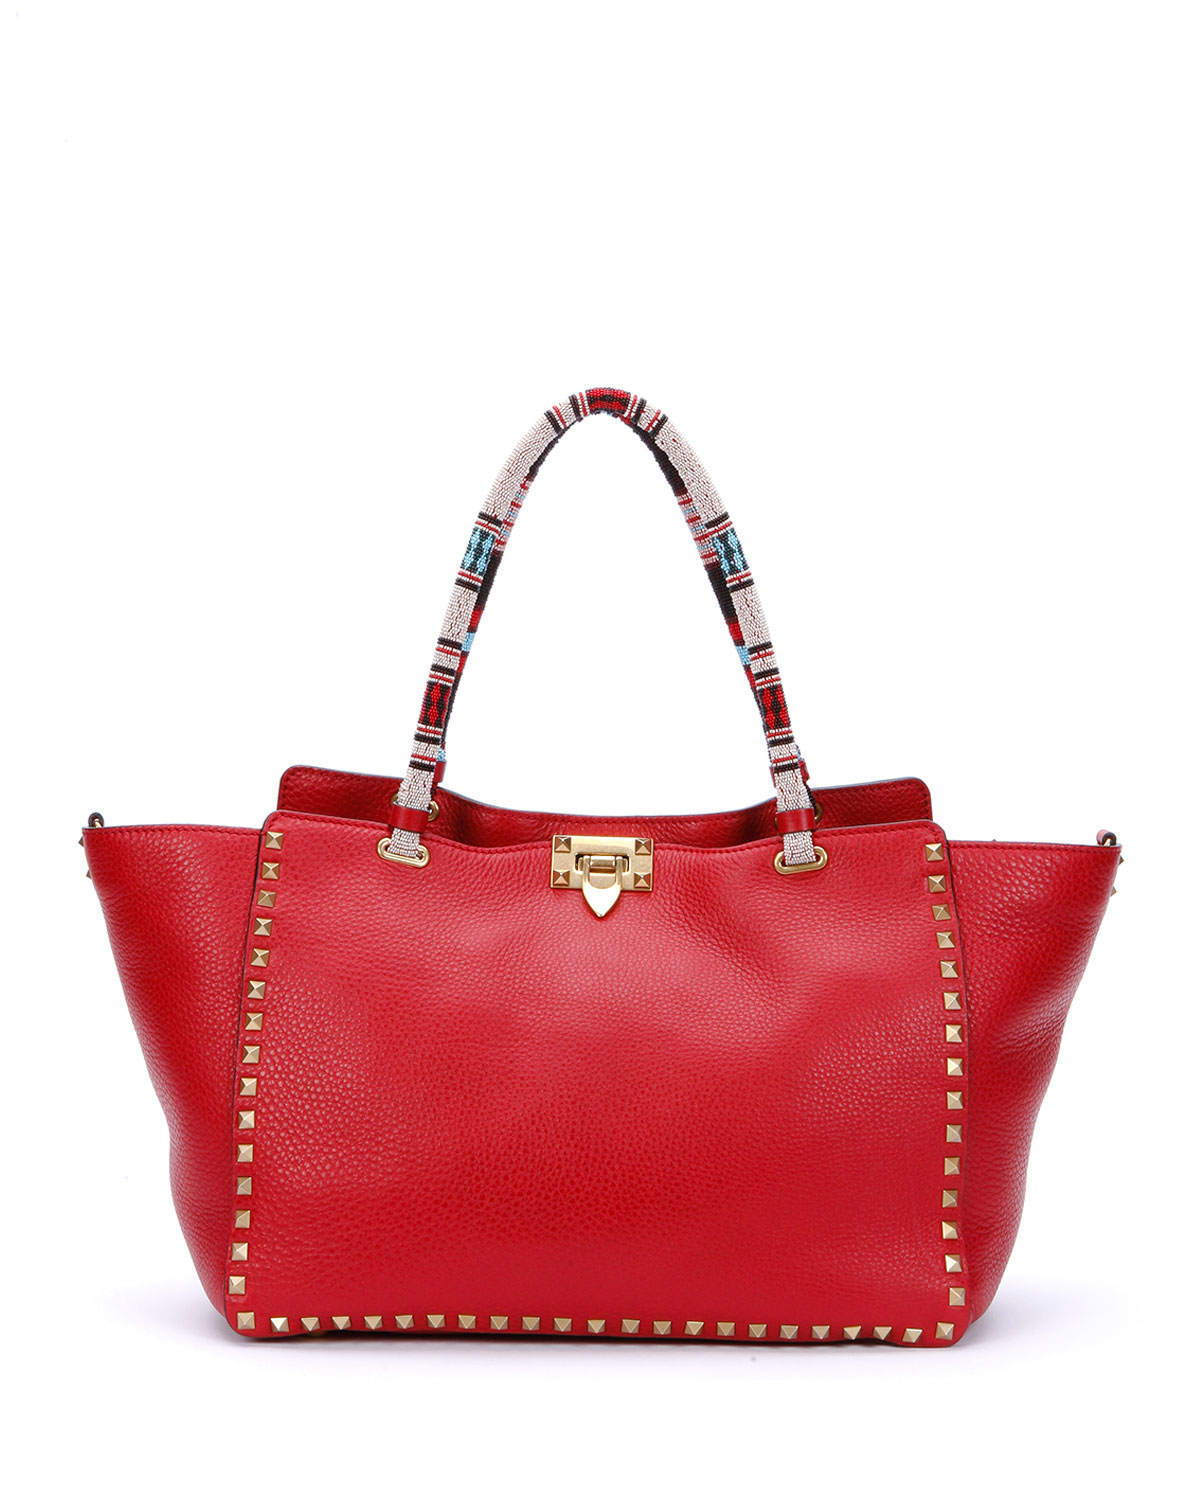 Lyst - Valentino Medium Beaded-handle Rockstud Tote Bag in Red